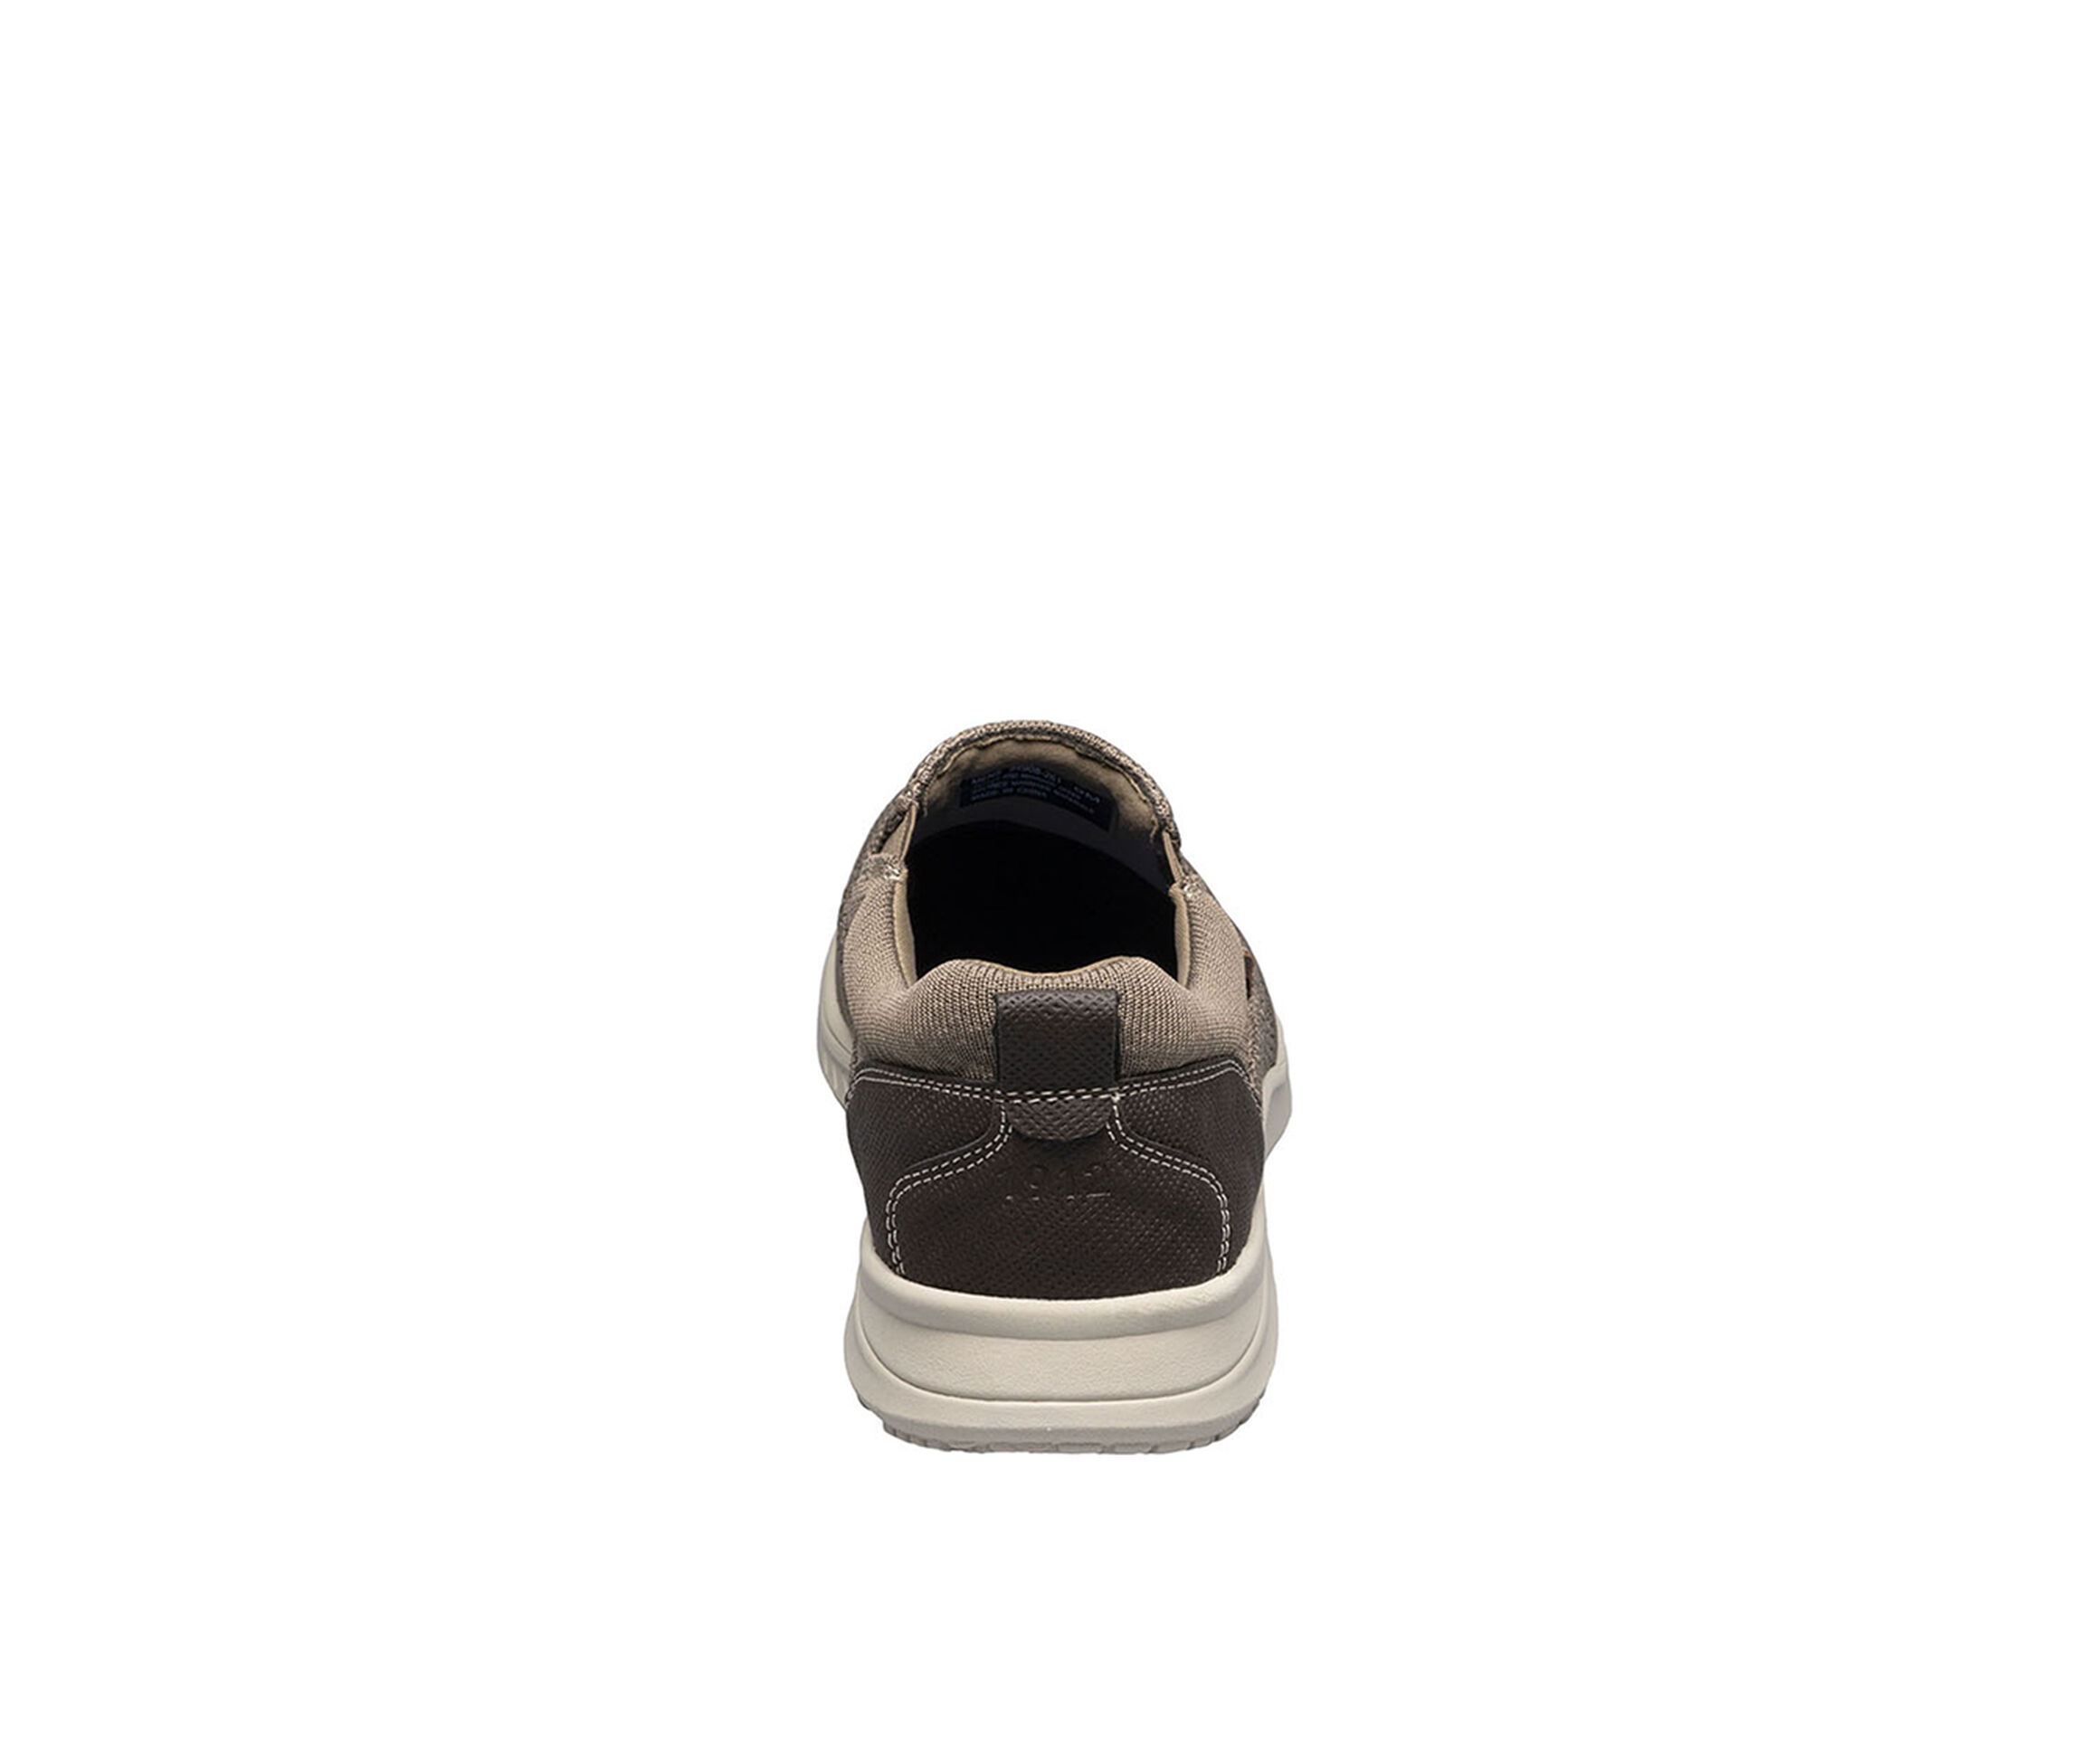 Details about   Nunn Bush Men's Conway Slip-on Loafer with Comfort Choose SZ/color